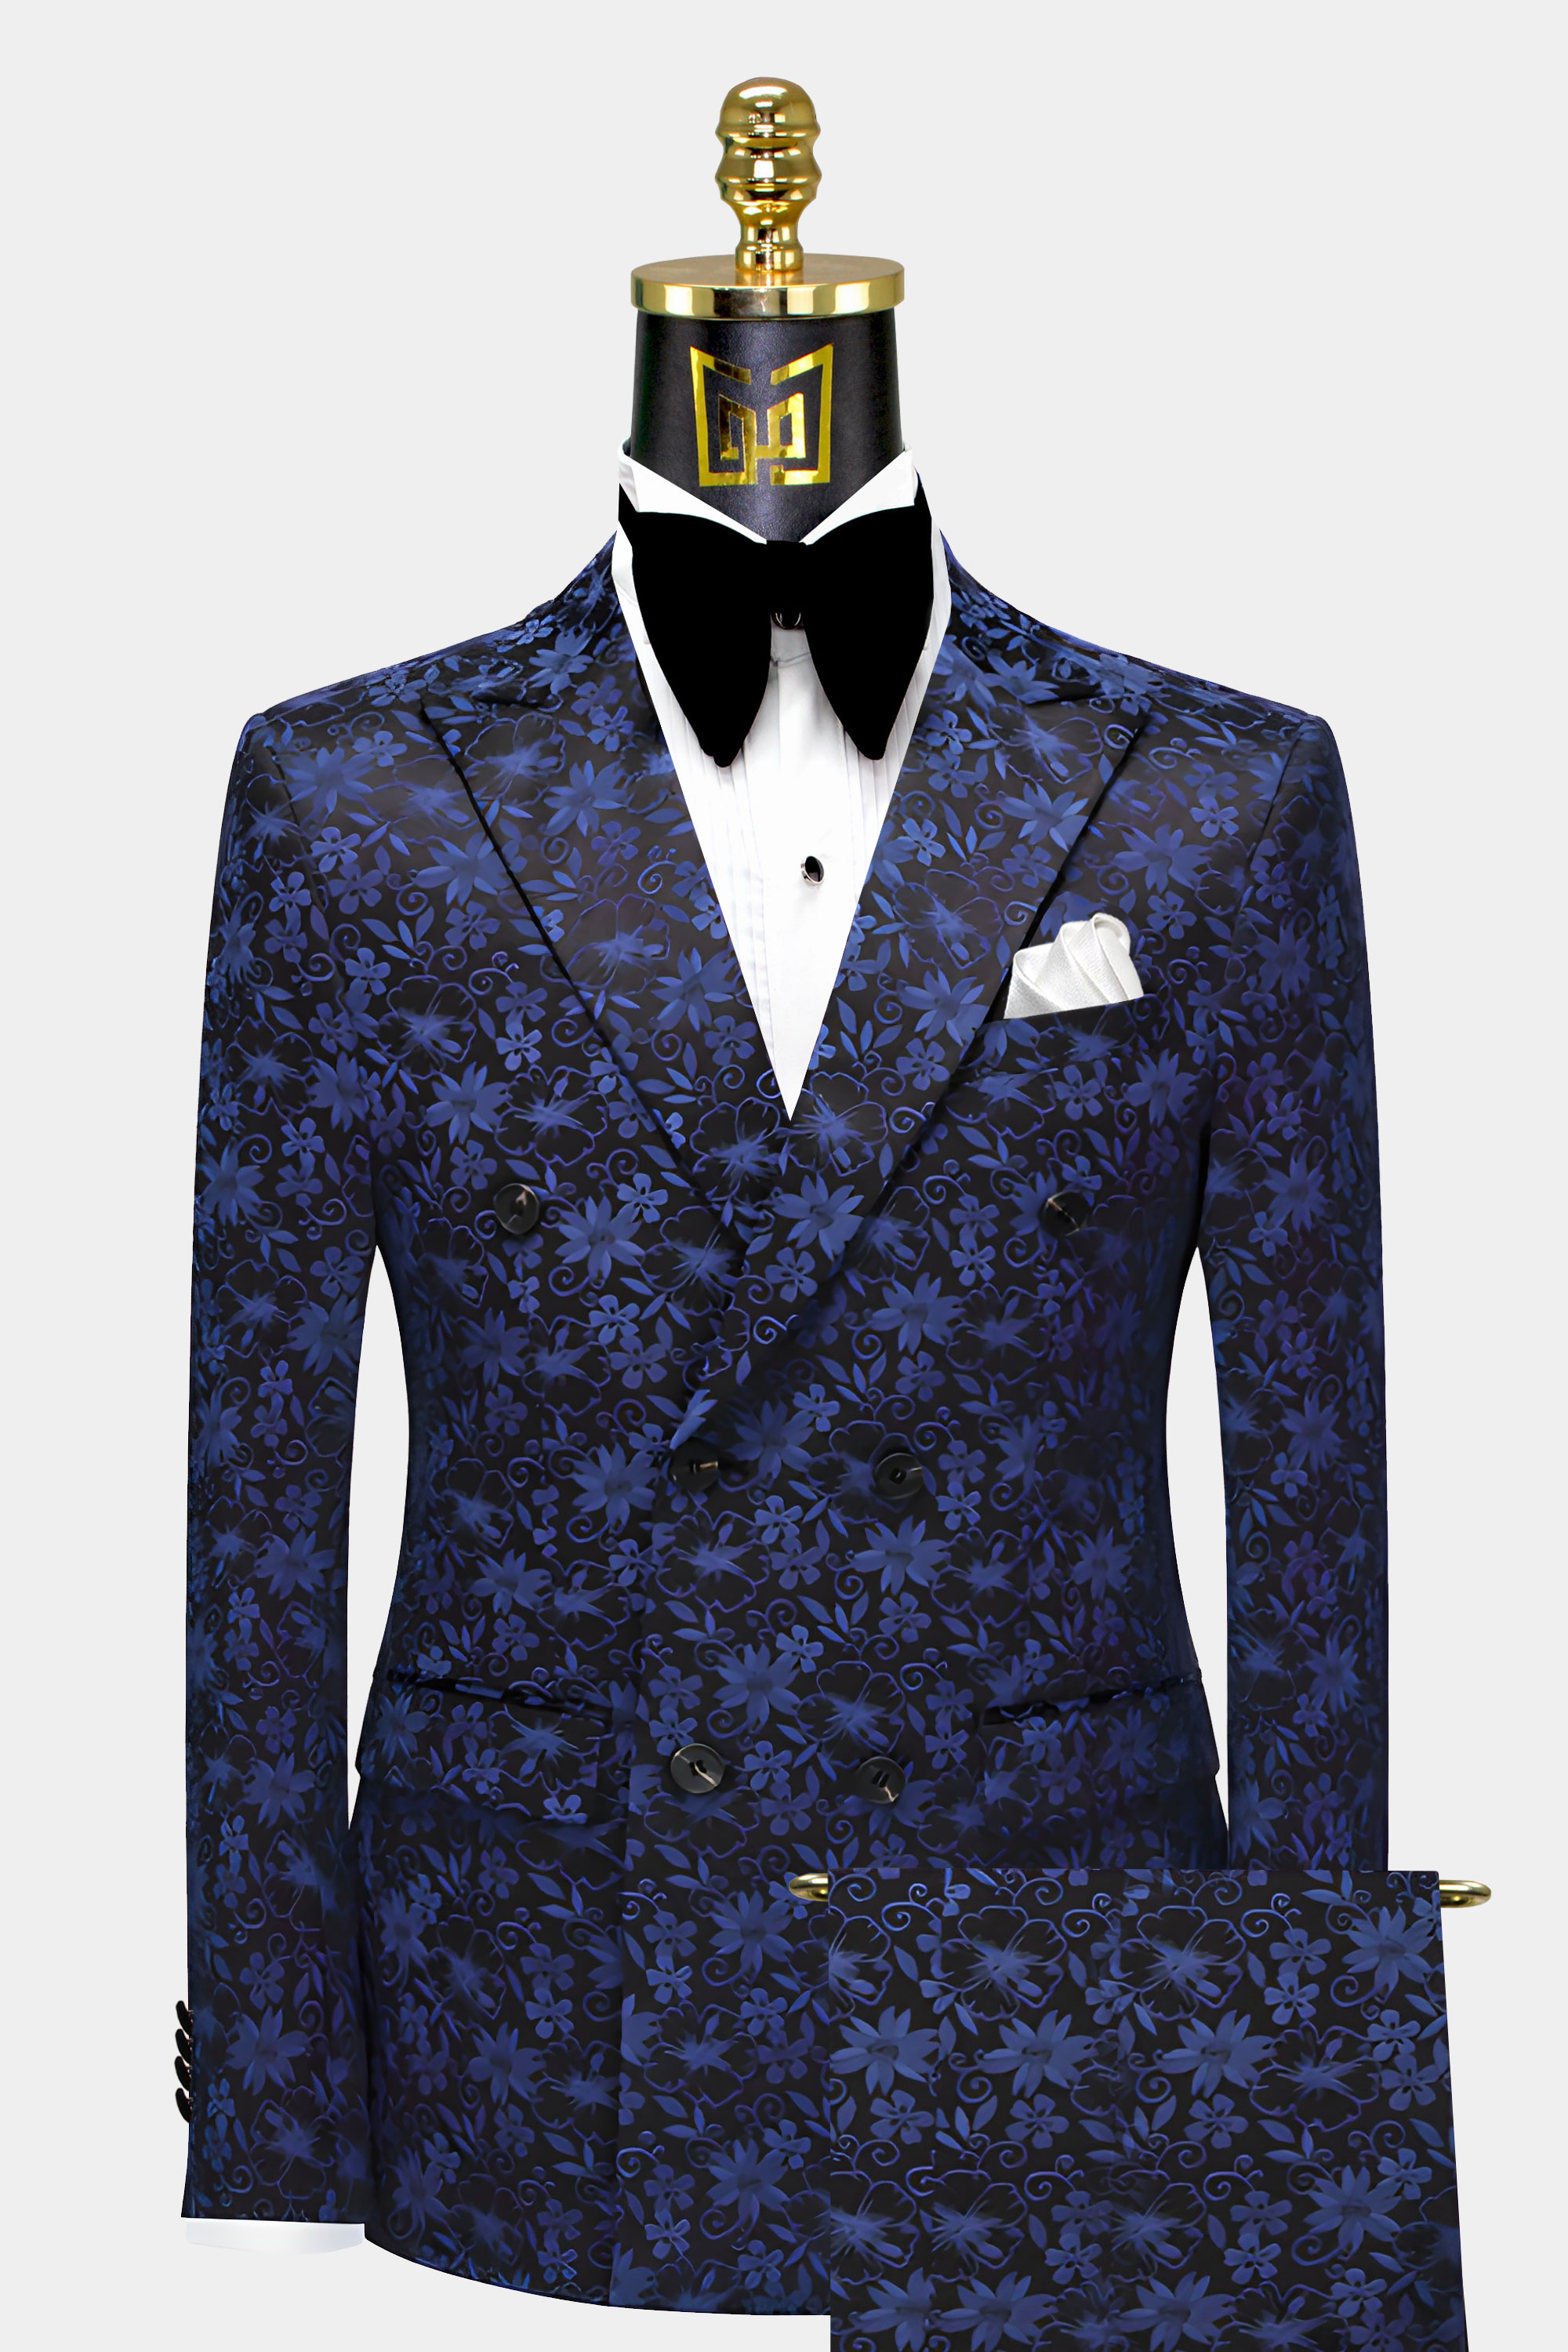 Mens-Blue-Floral-Suit-Daisy-Wedding-Groom-Prom-Tuxedo-from-Gentlemansguru.com